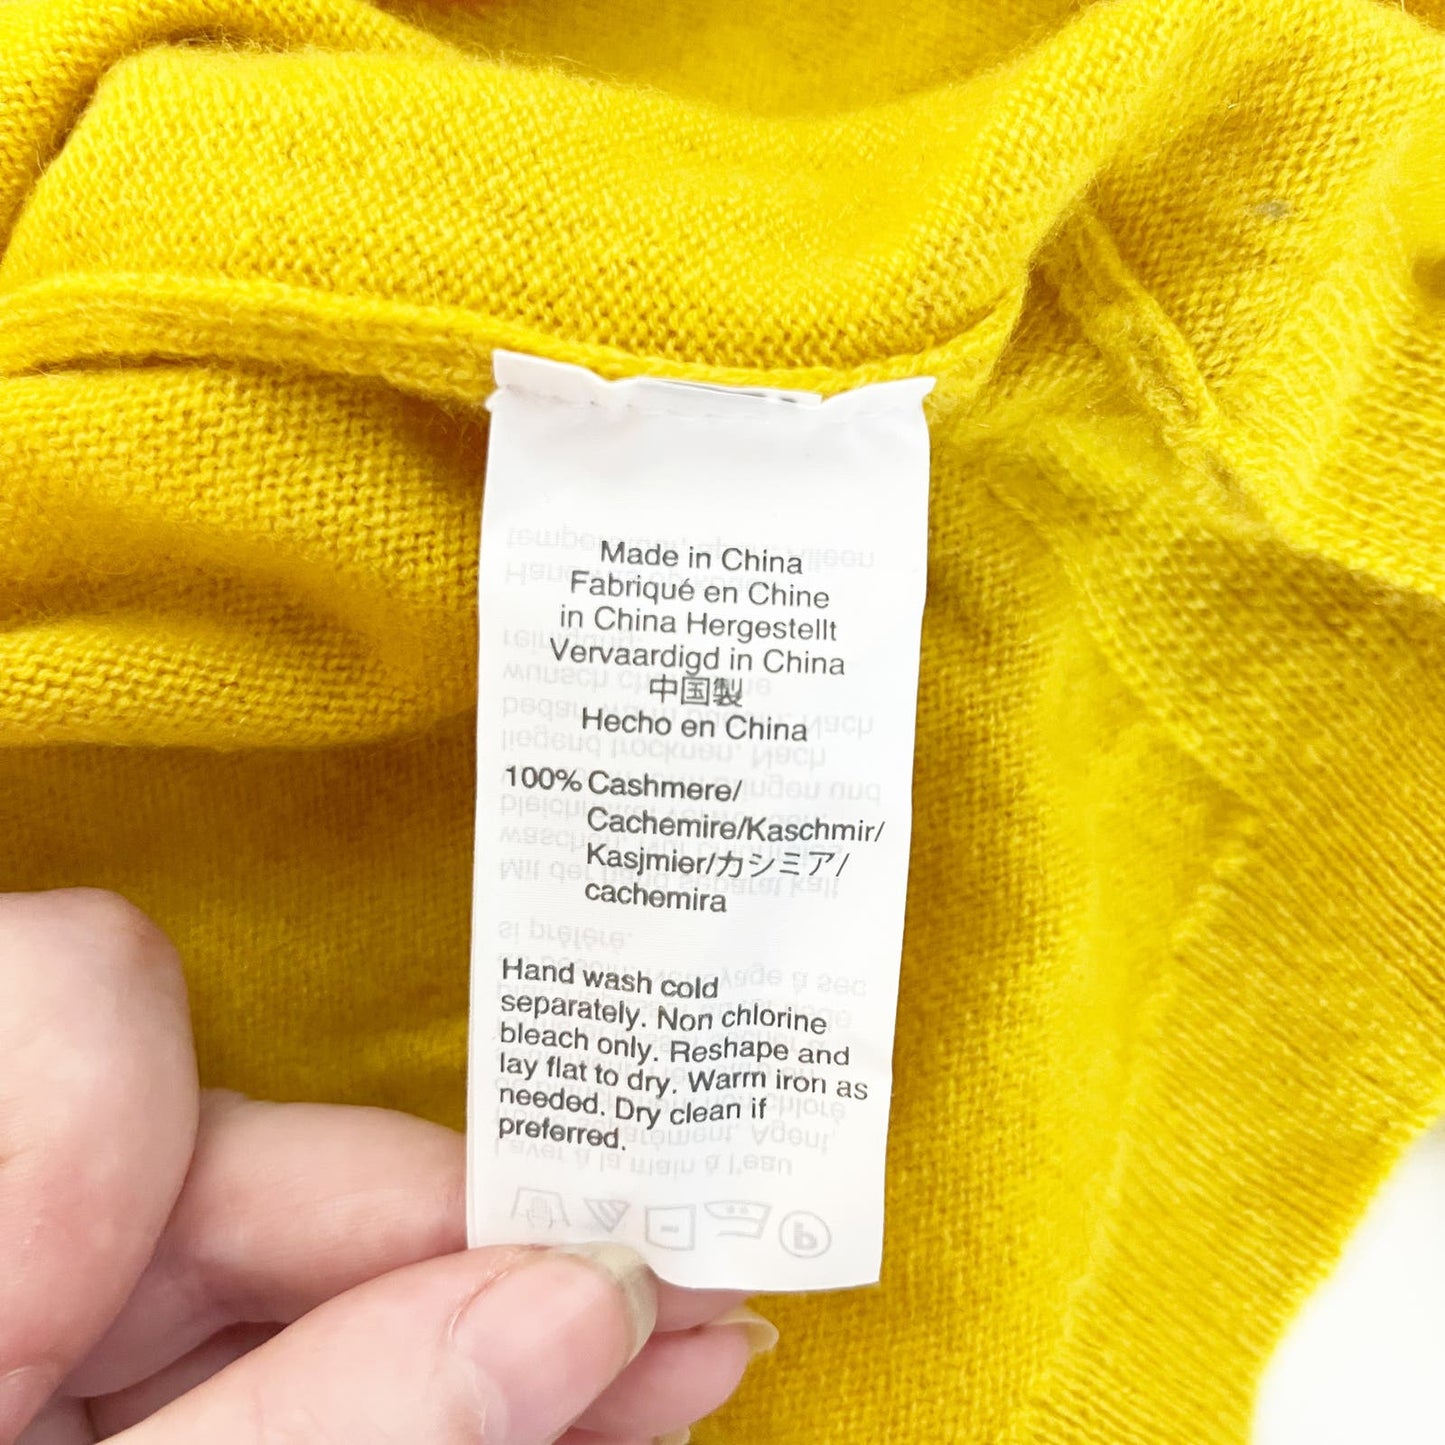 J. Crew Everyday Long Sleeve Star Print Cashmere Sweater Yellow 2X